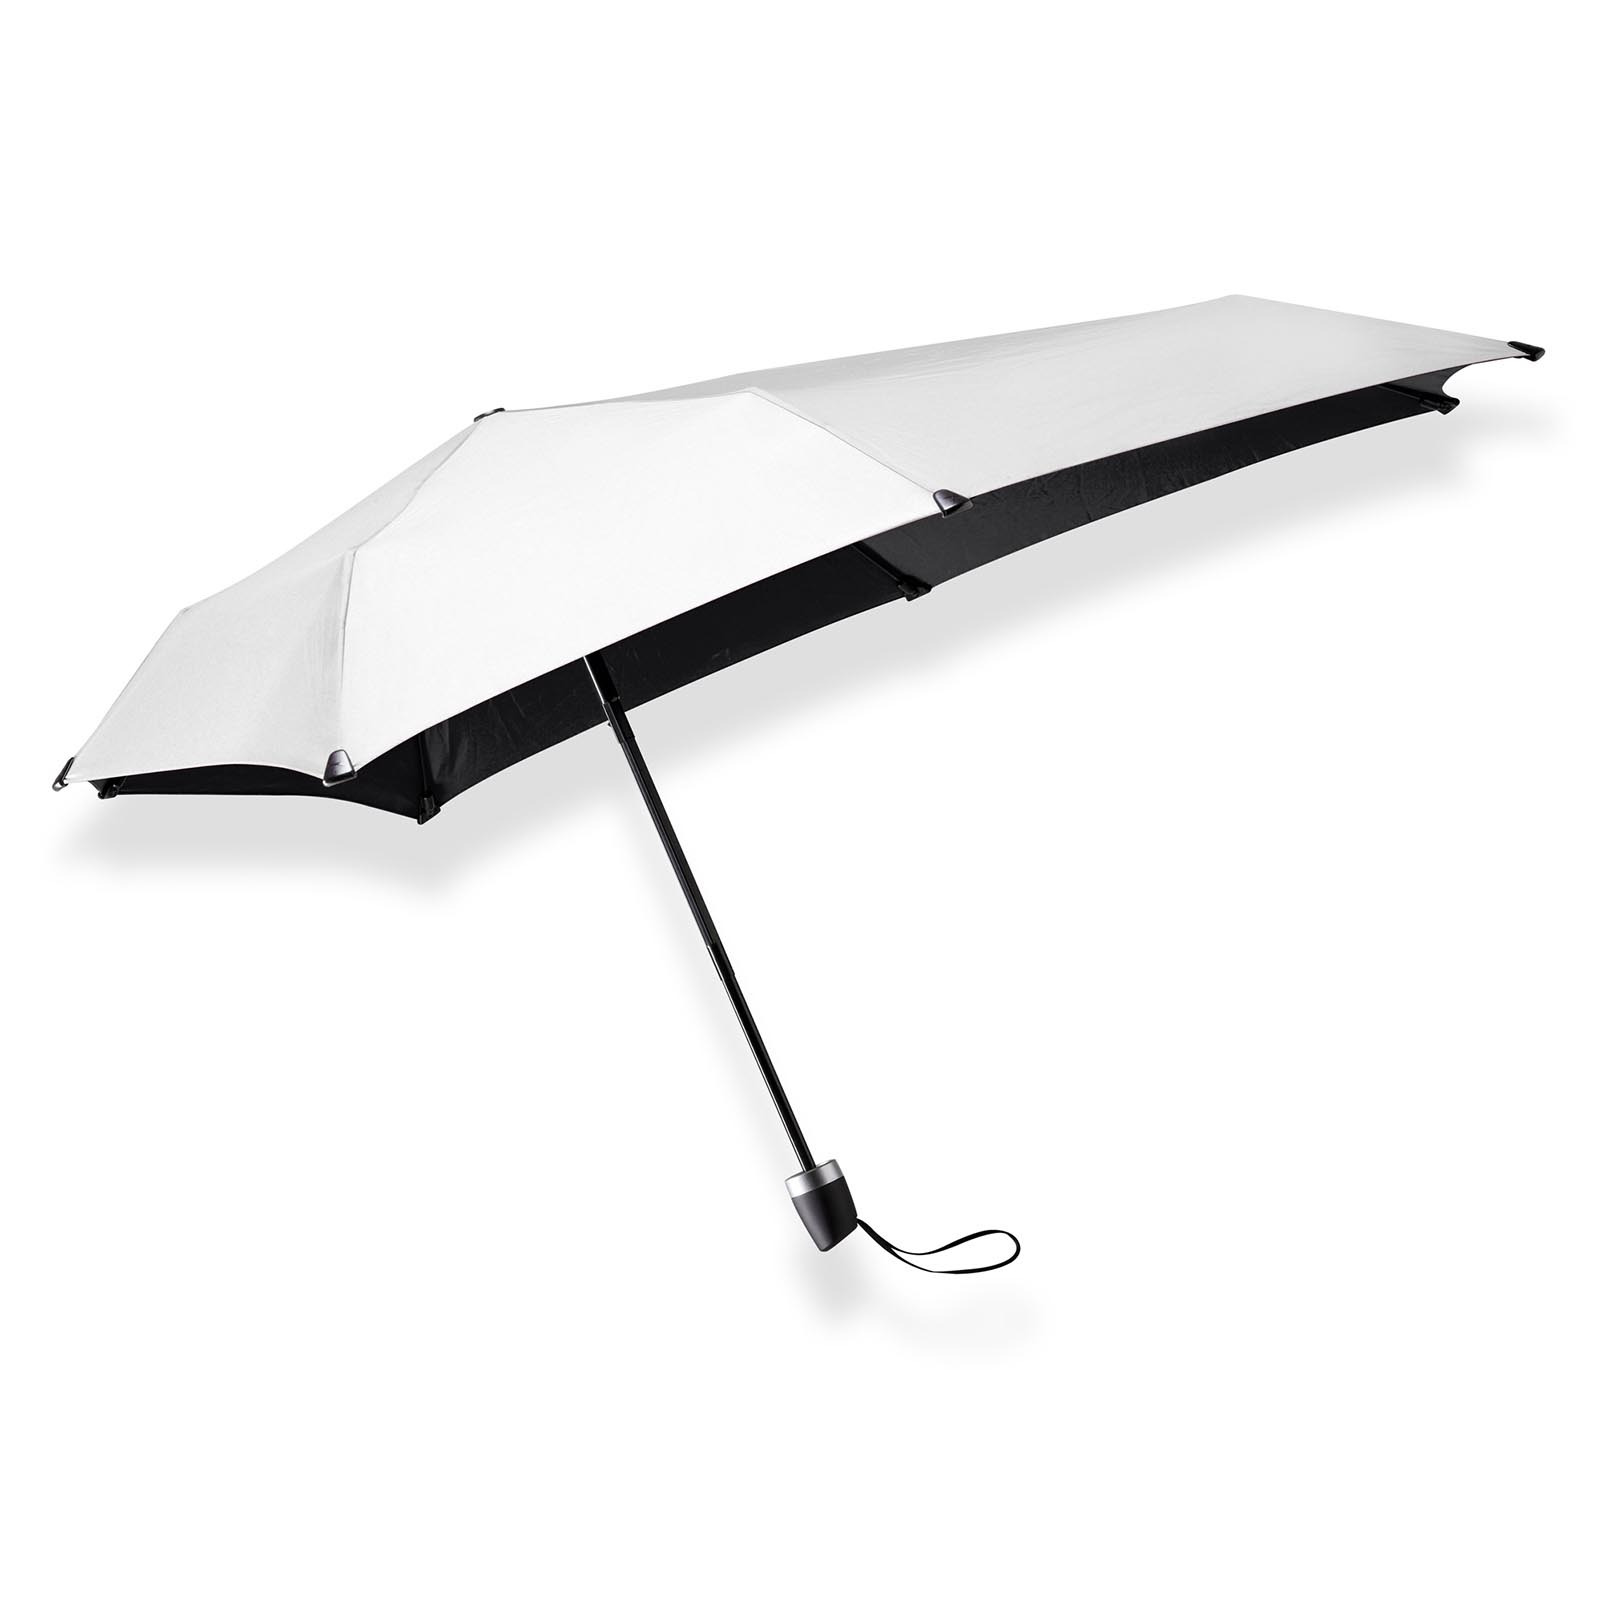 Alternatief Commotie verkwistend Zilveren opvouwbare paraplu mini kopen? senz° mini shiny silver